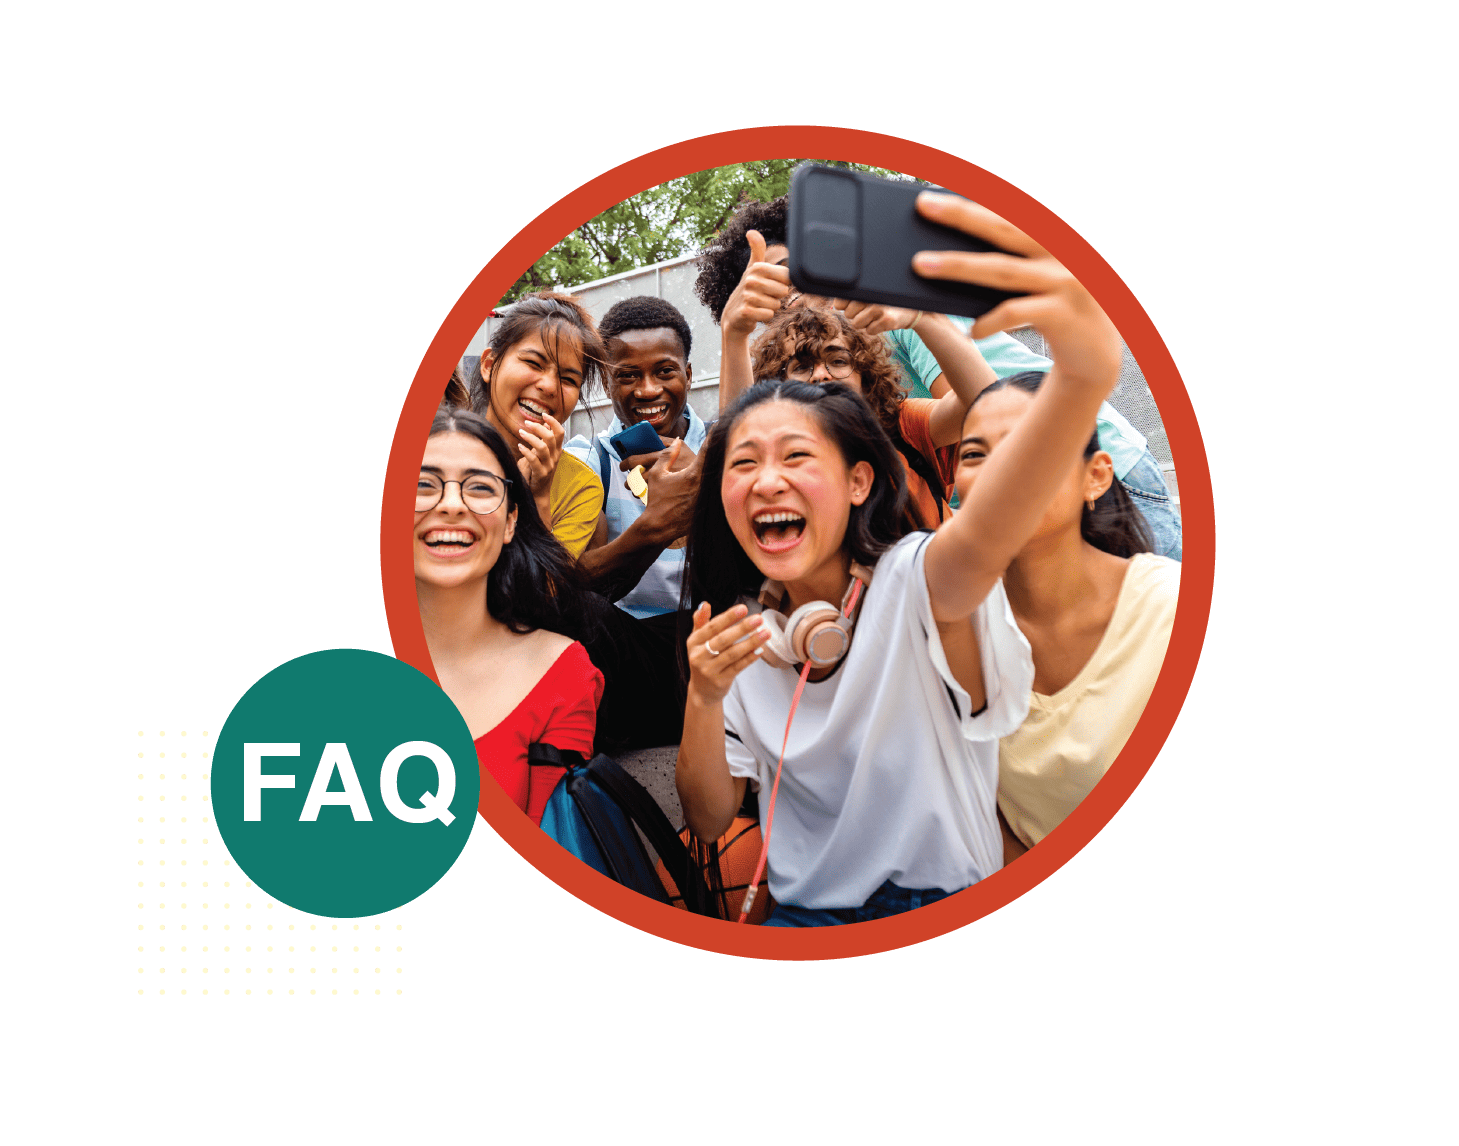 FAQ - High School Students Taking a Selfie